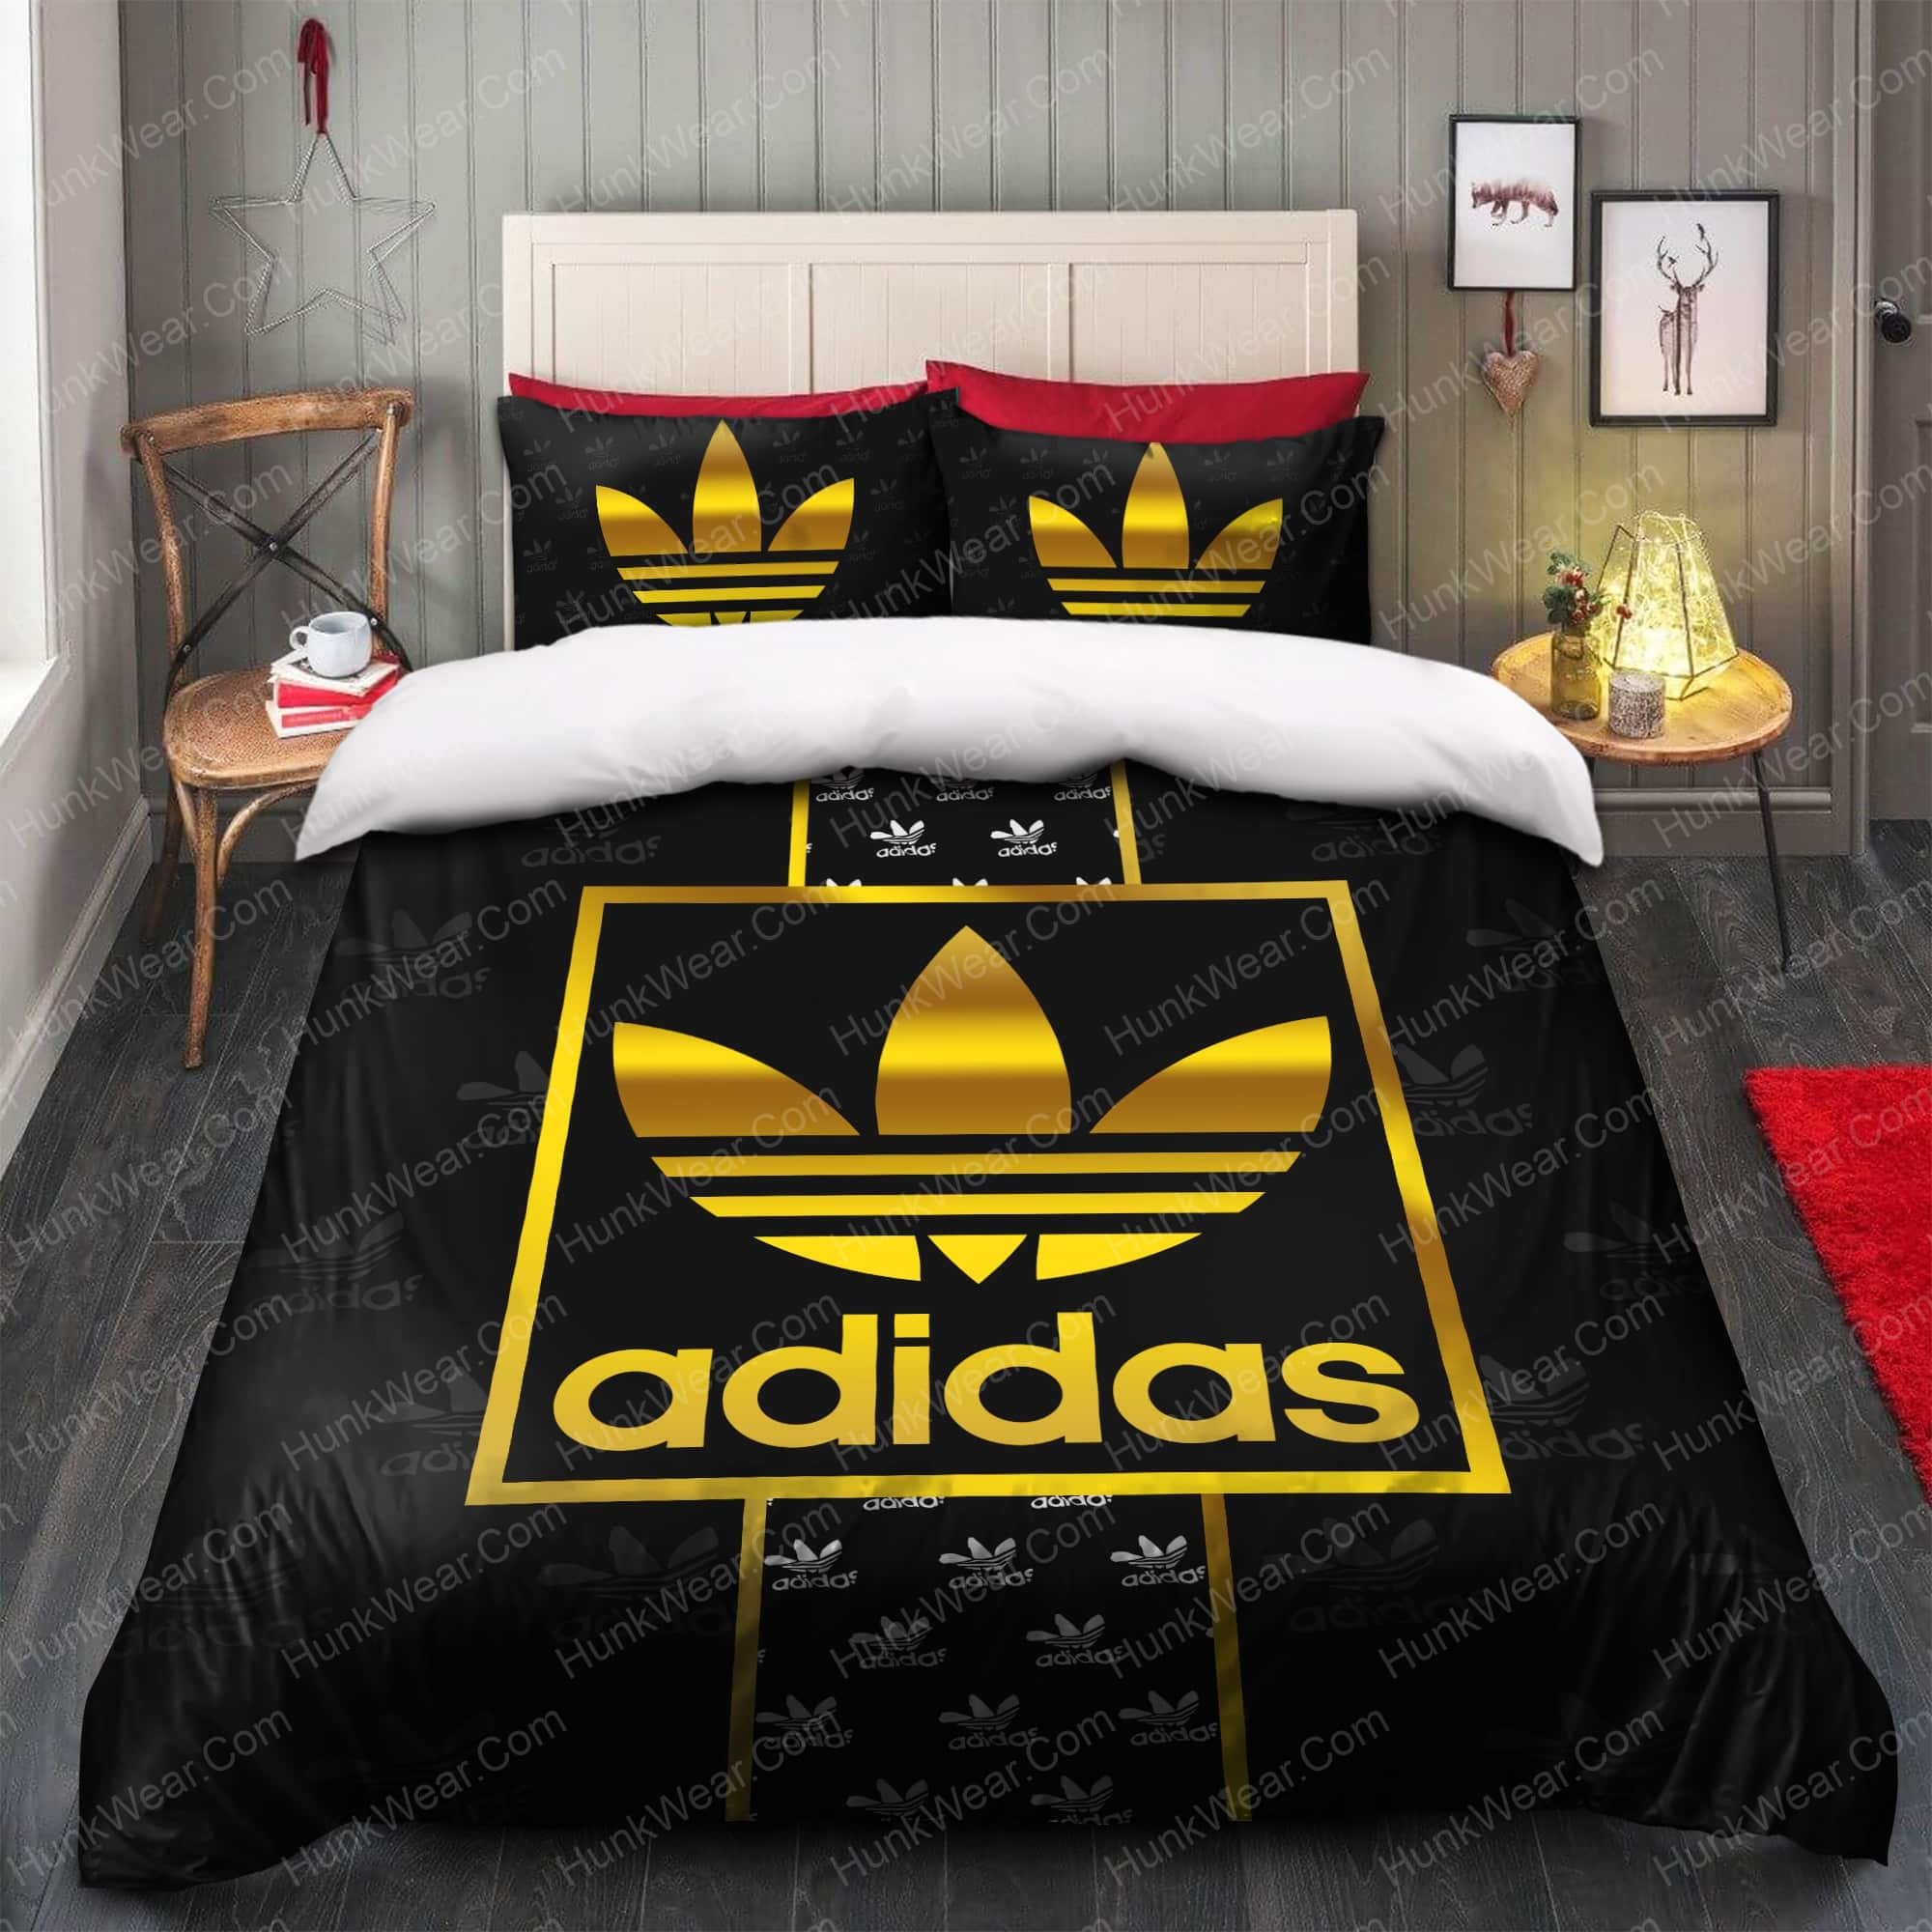 adidas gold logo bedding sets 4